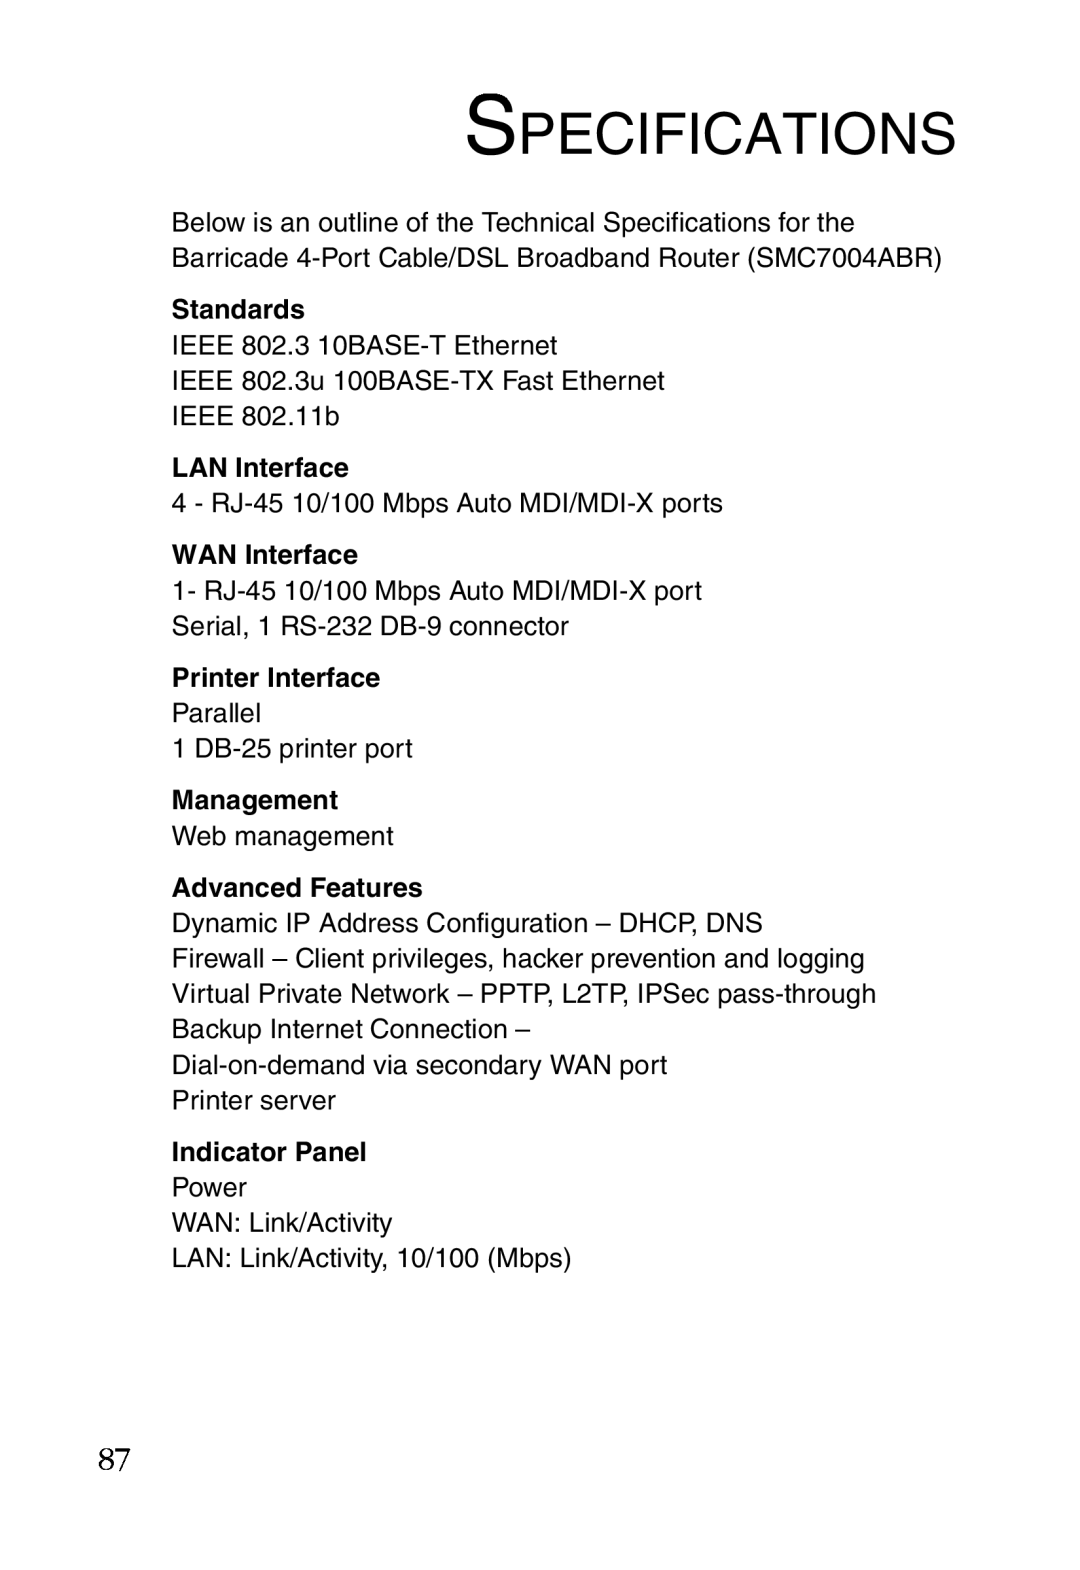 Sharp S M C 7 0 0 4 A B R manual Specifications, Standards, LAN Interface, WAN Interface, Printer Interface, Management 